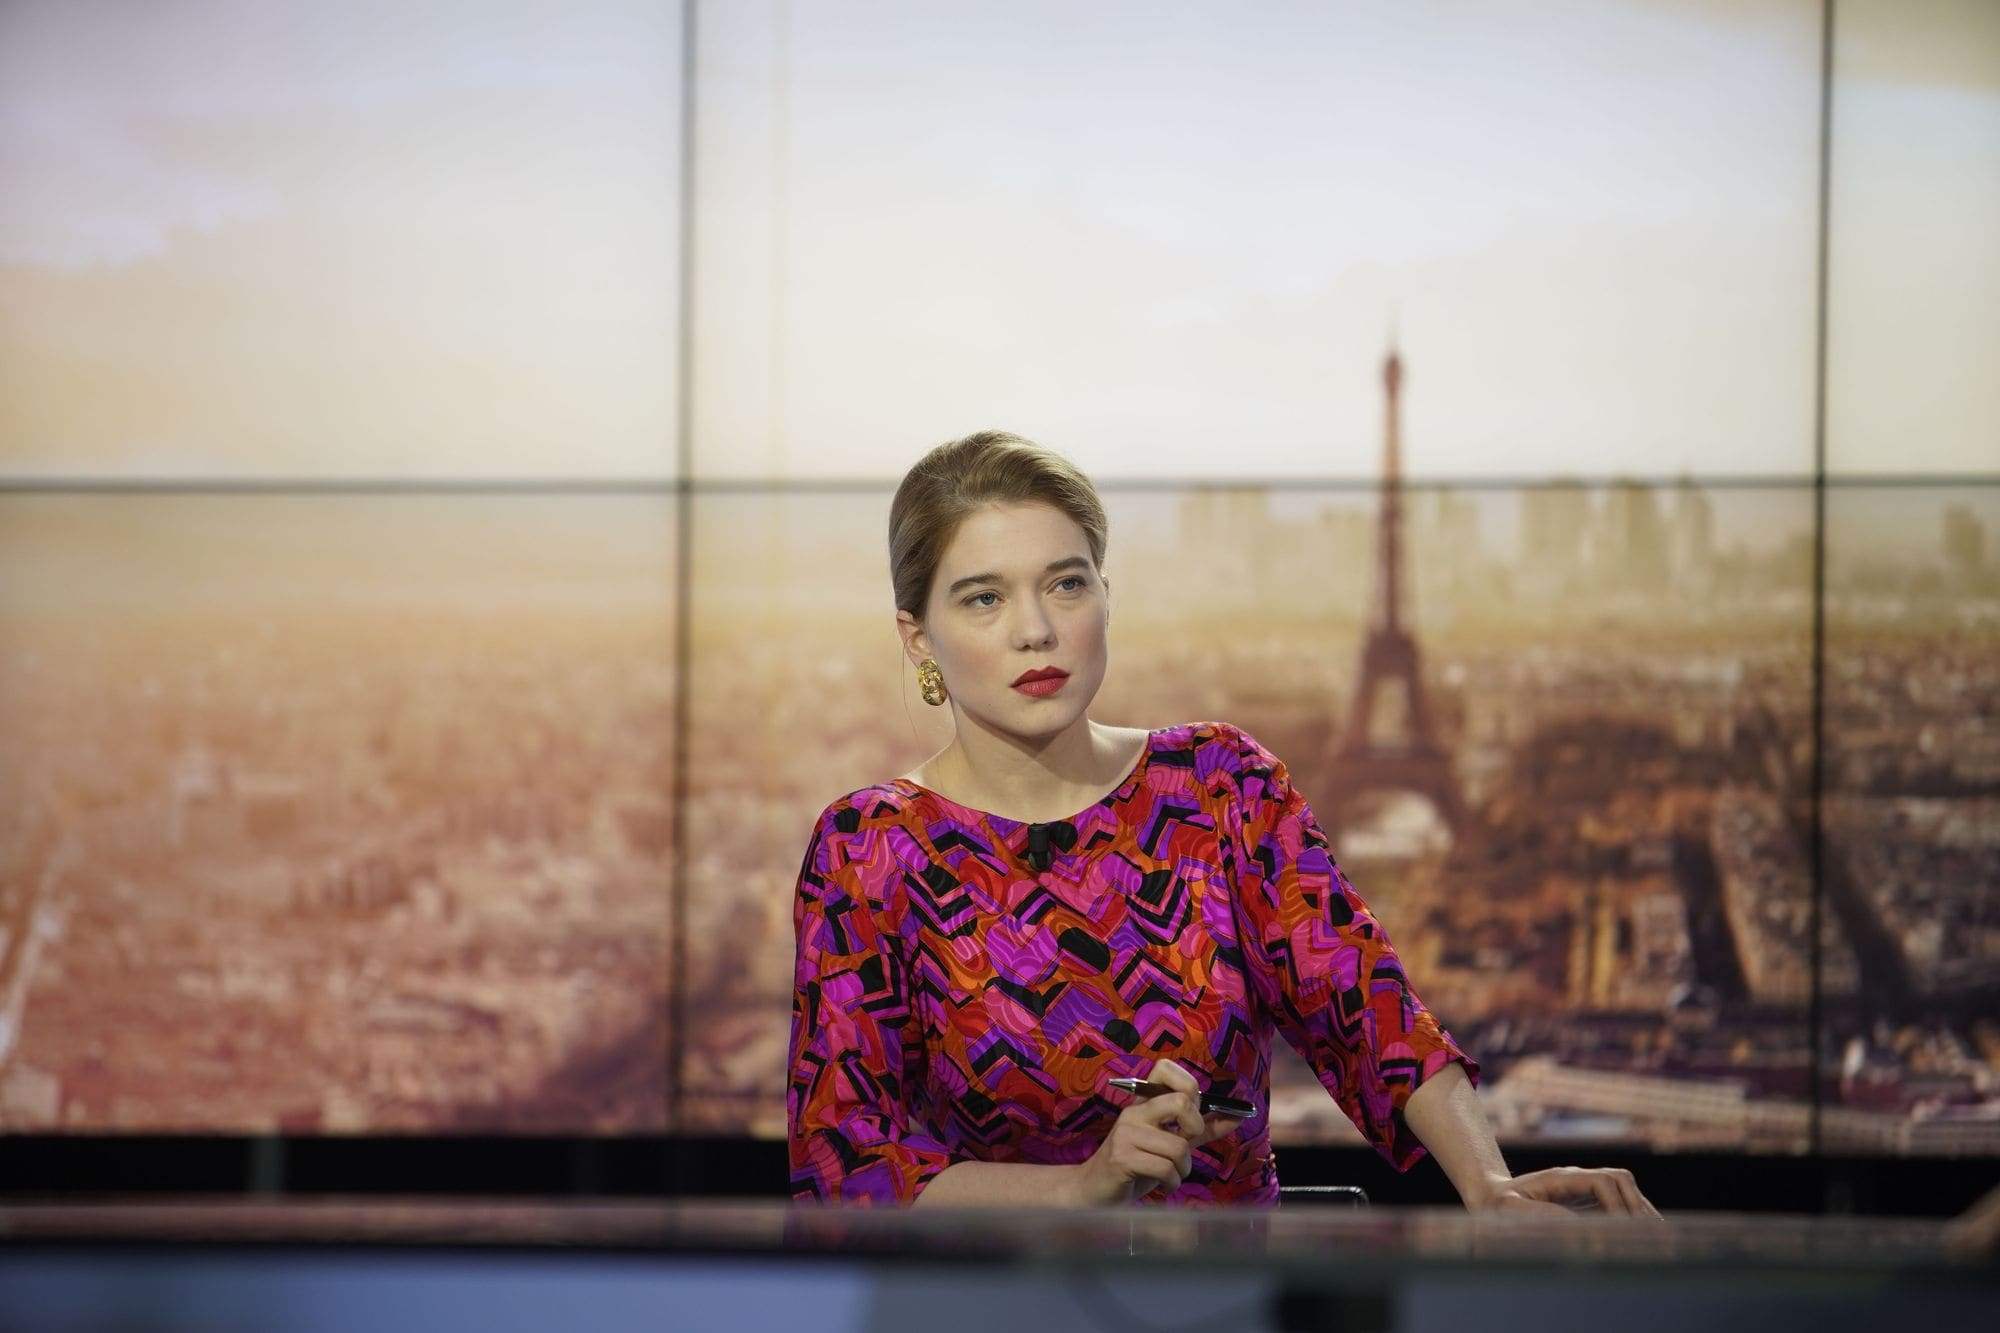 France de Meurs behind the news desk